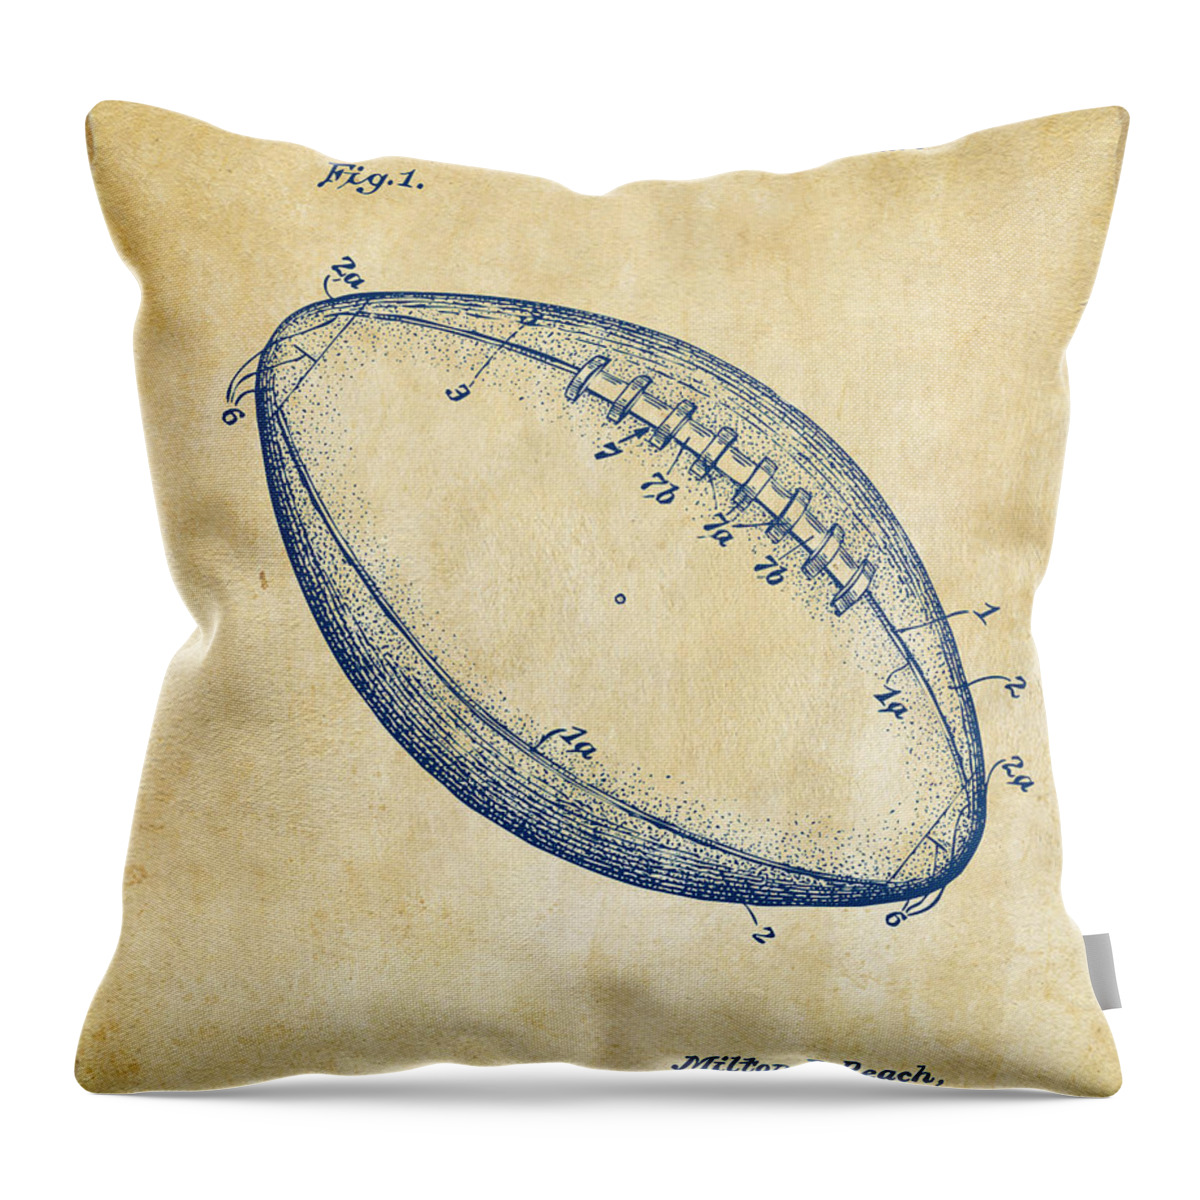 Fotball Throw Pillow featuring the digital art 1939 Football Patent Artwork - Vintage by Nikki Marie Smith